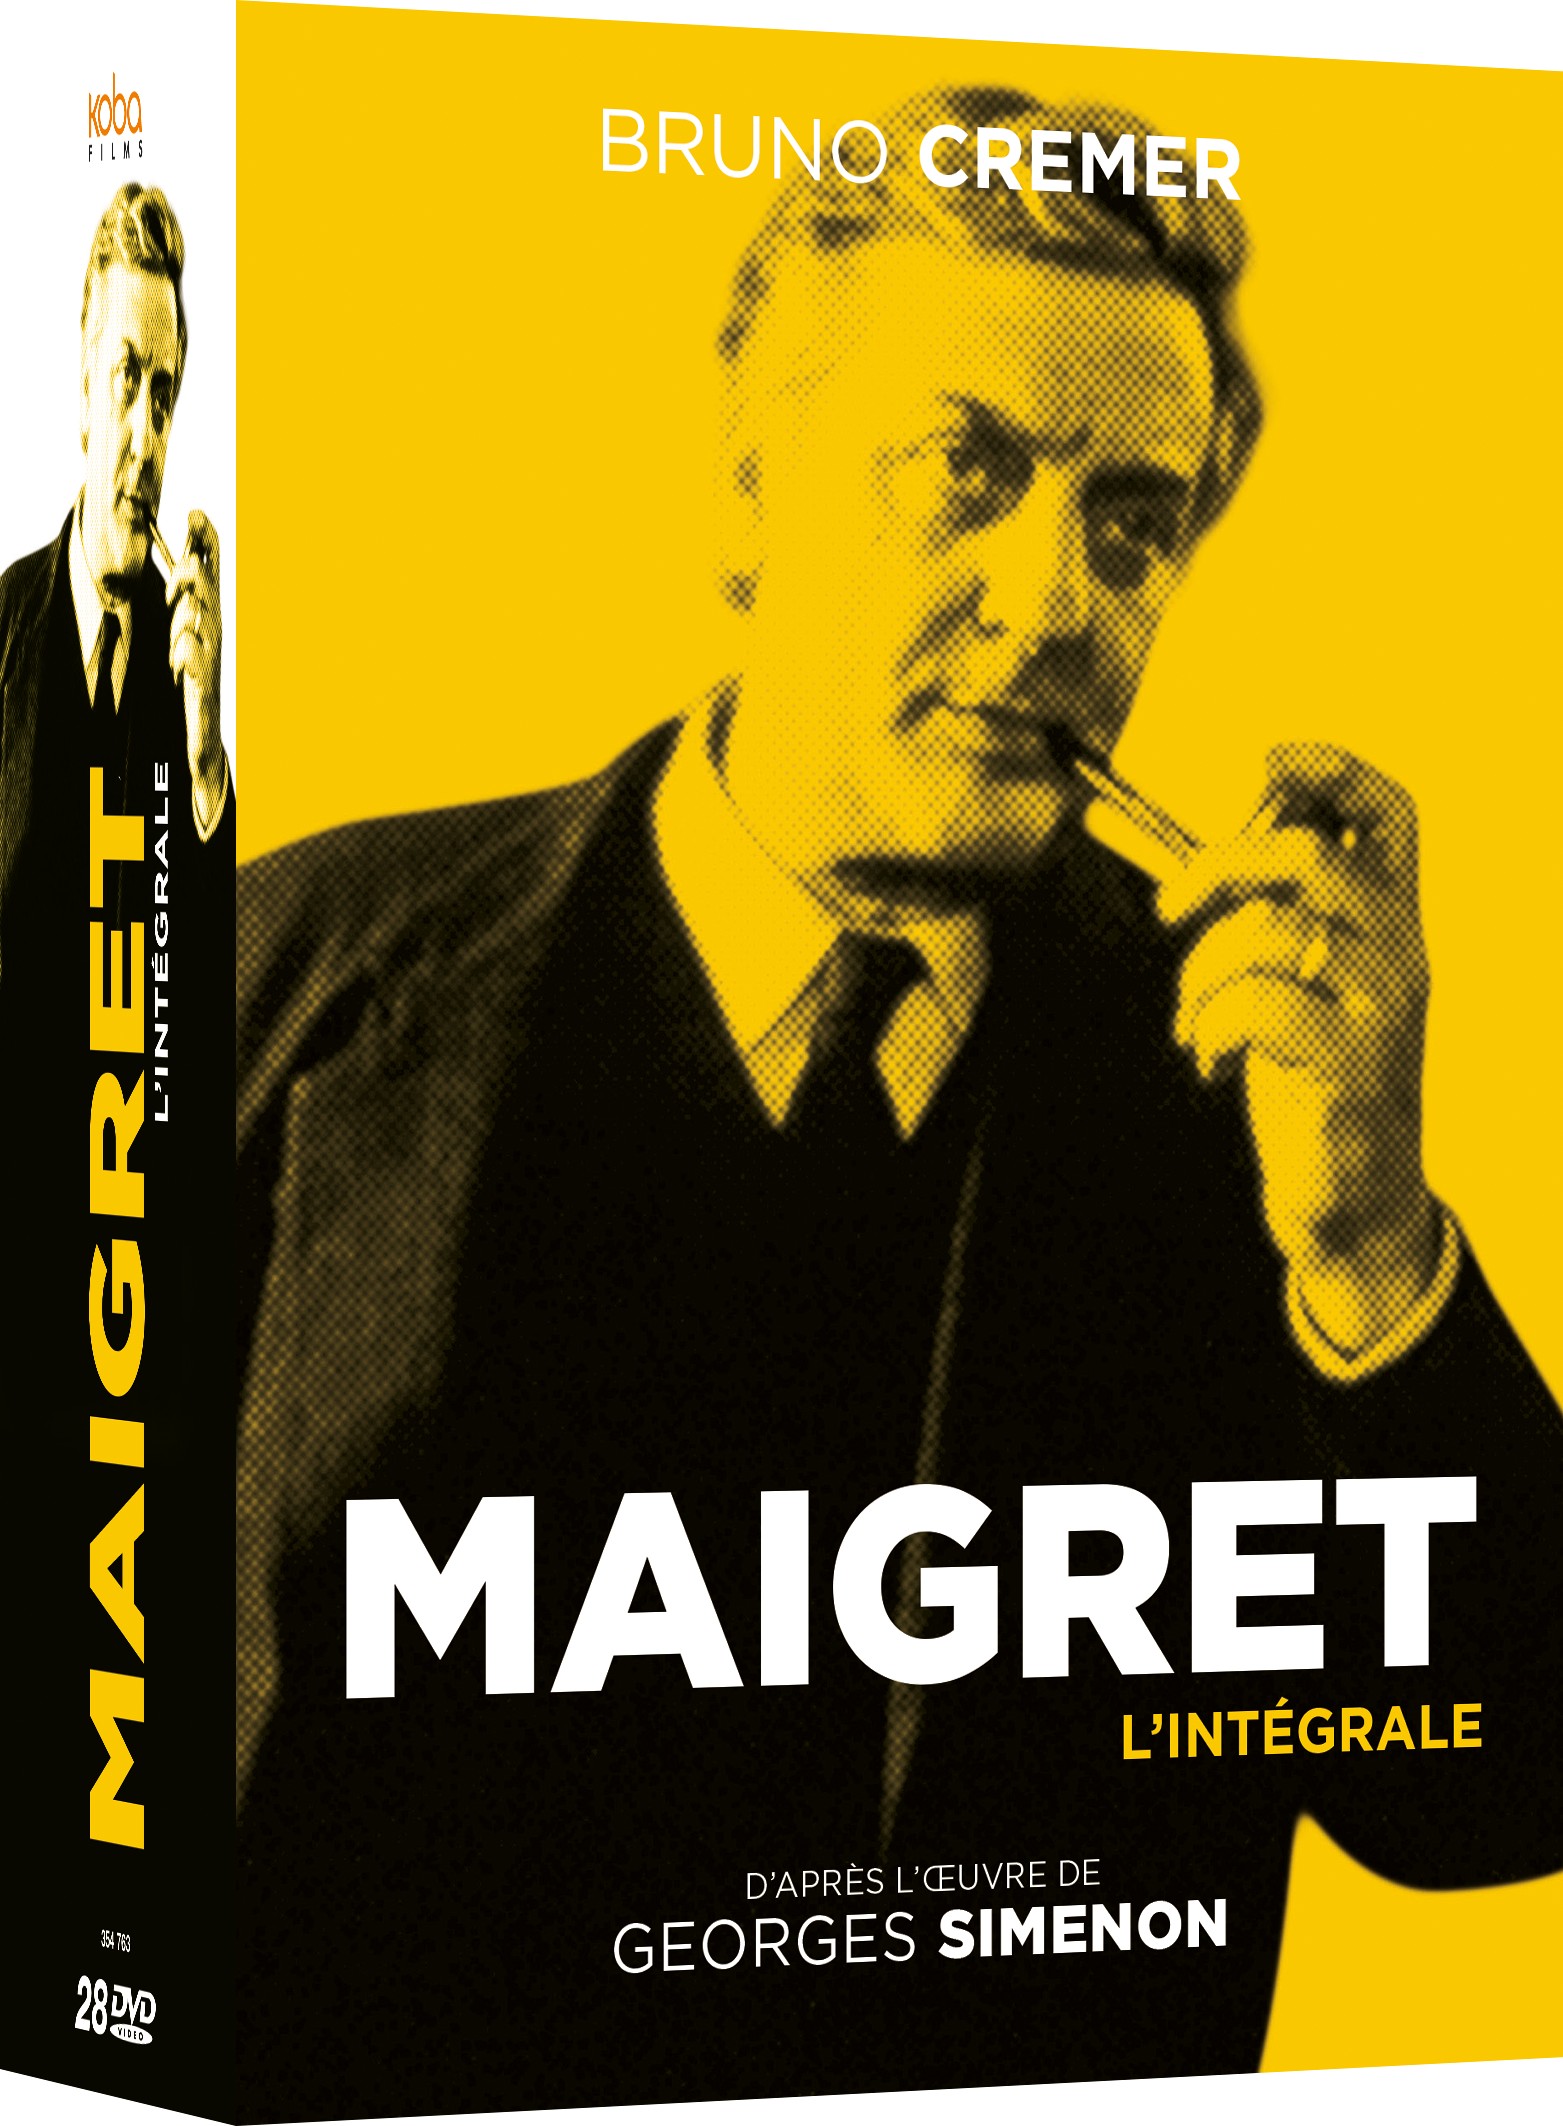 MAIGRET - L'INTEGRALE VOLUMES 1 à 7 (28 DVD)